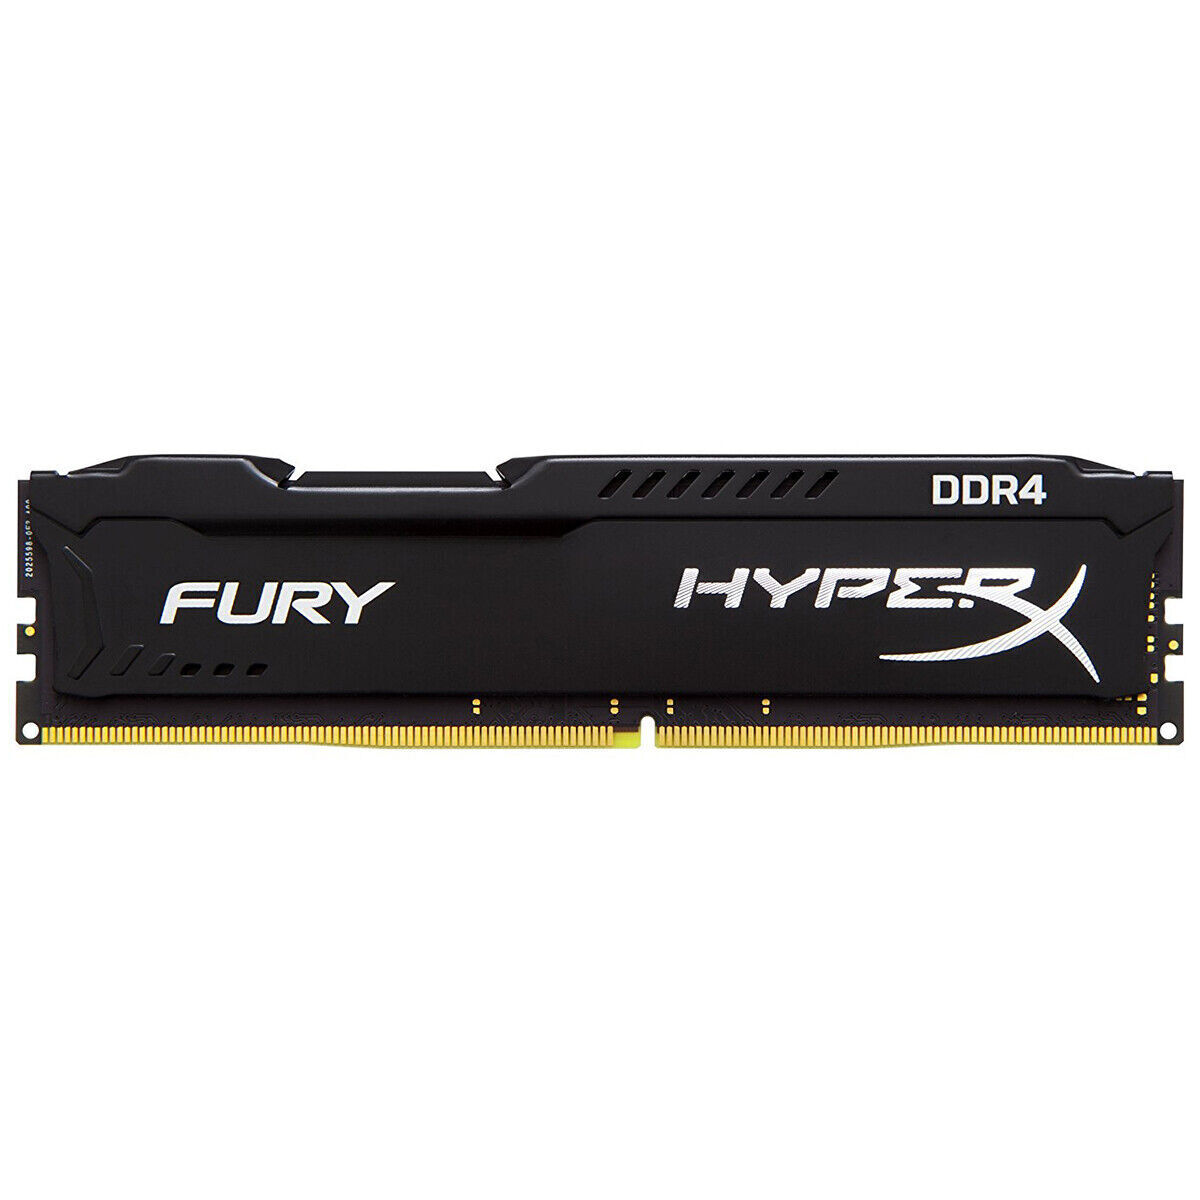 HyperX FURY DDR4 8GB 16GB 4GB 32GB 2666MHz PC4-21300 Desktop RAM Memory DIMM 288